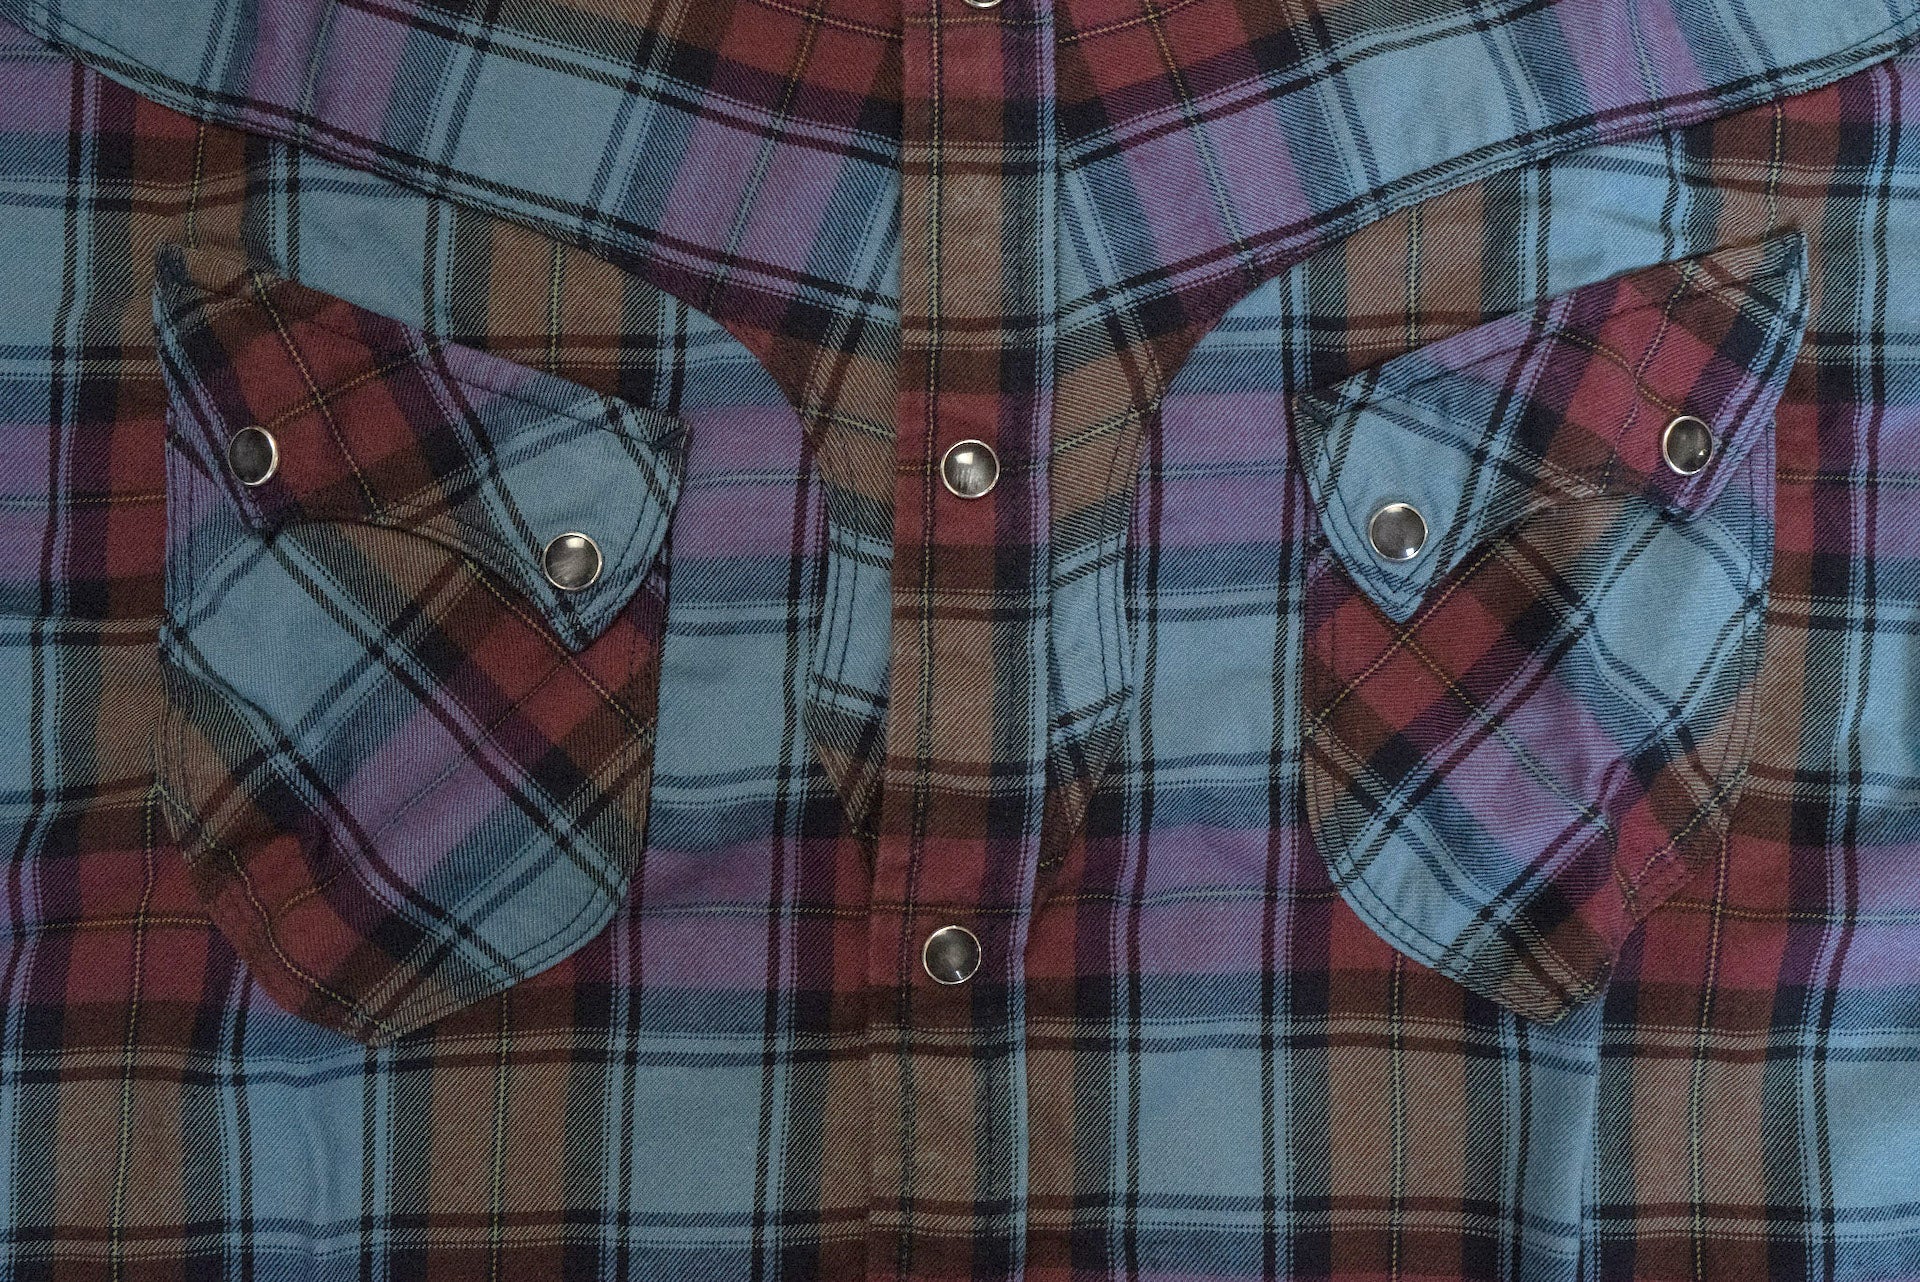 Stevenson Overall Co. 'Cody' Lightweight Plaid Western Shirt (Aurora)